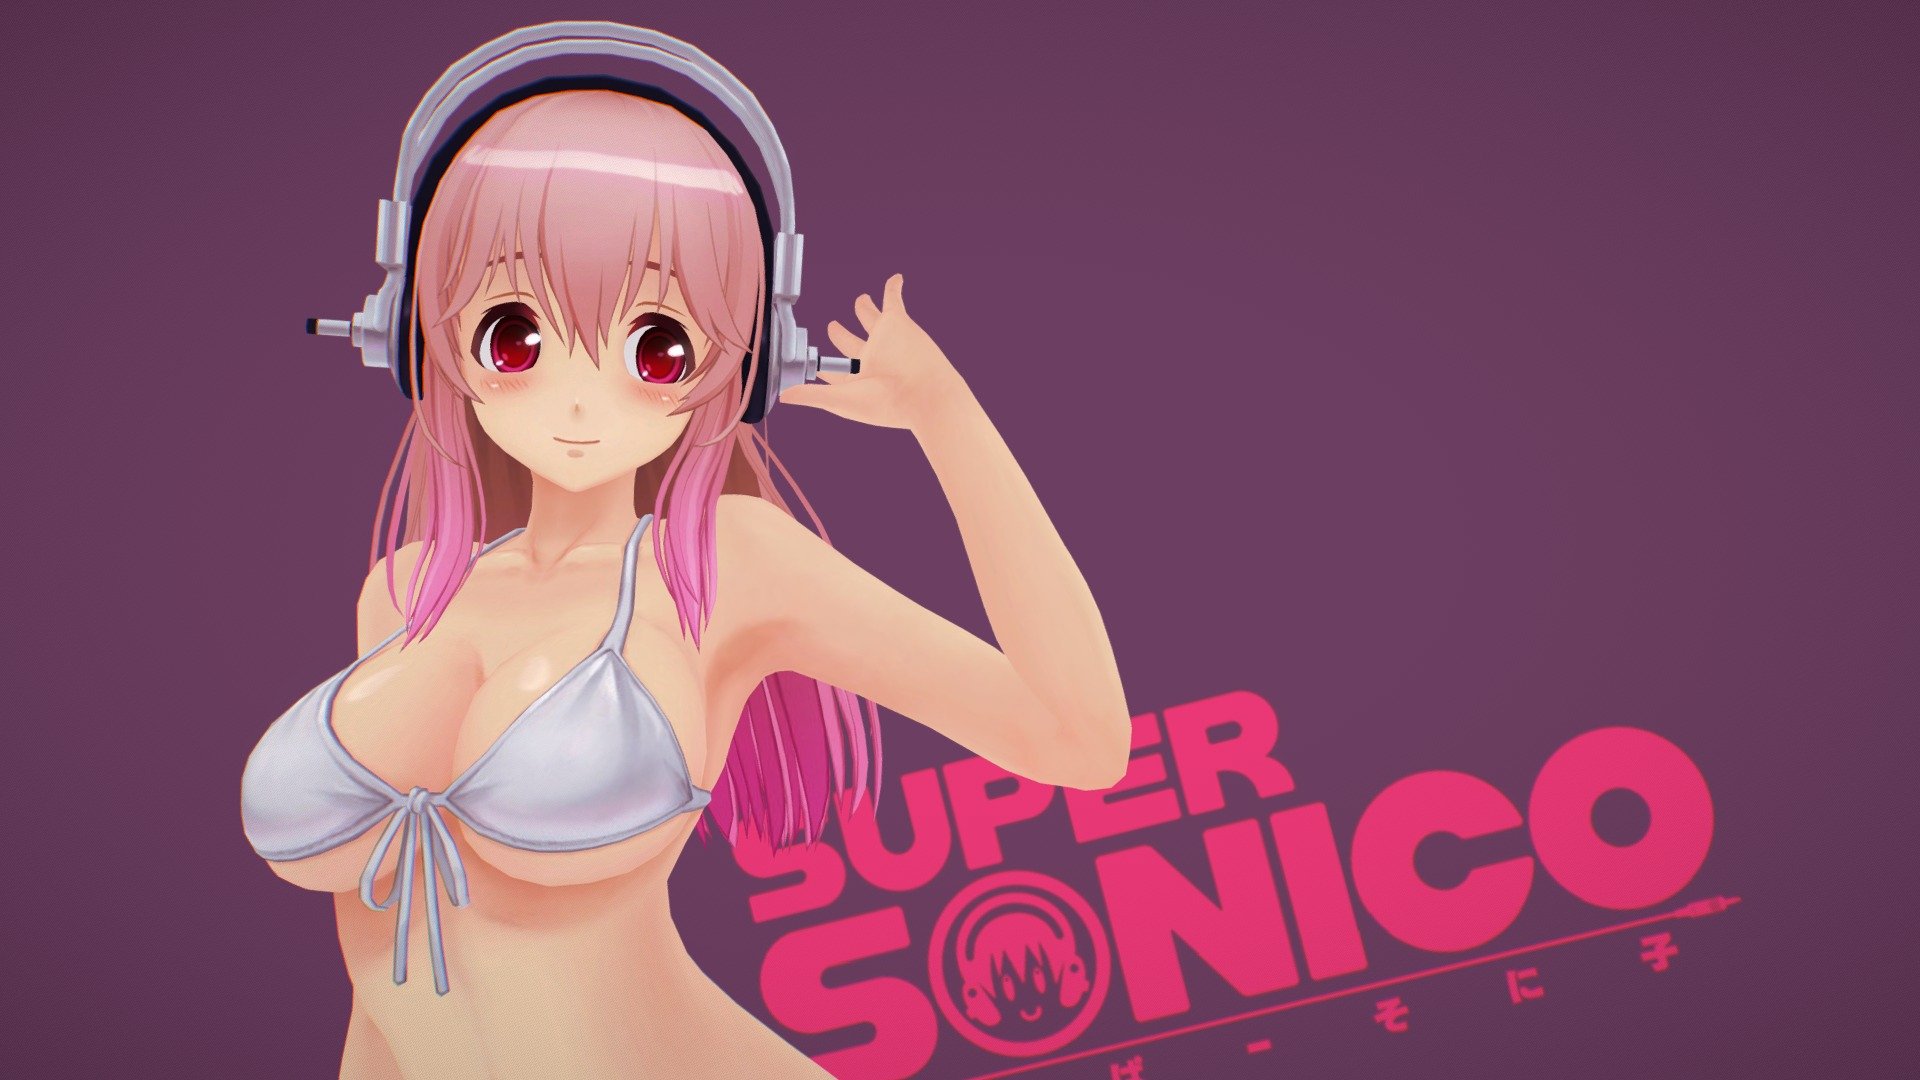 Super Sonico 16 X 11.5 Inch 3D Poster Version A 